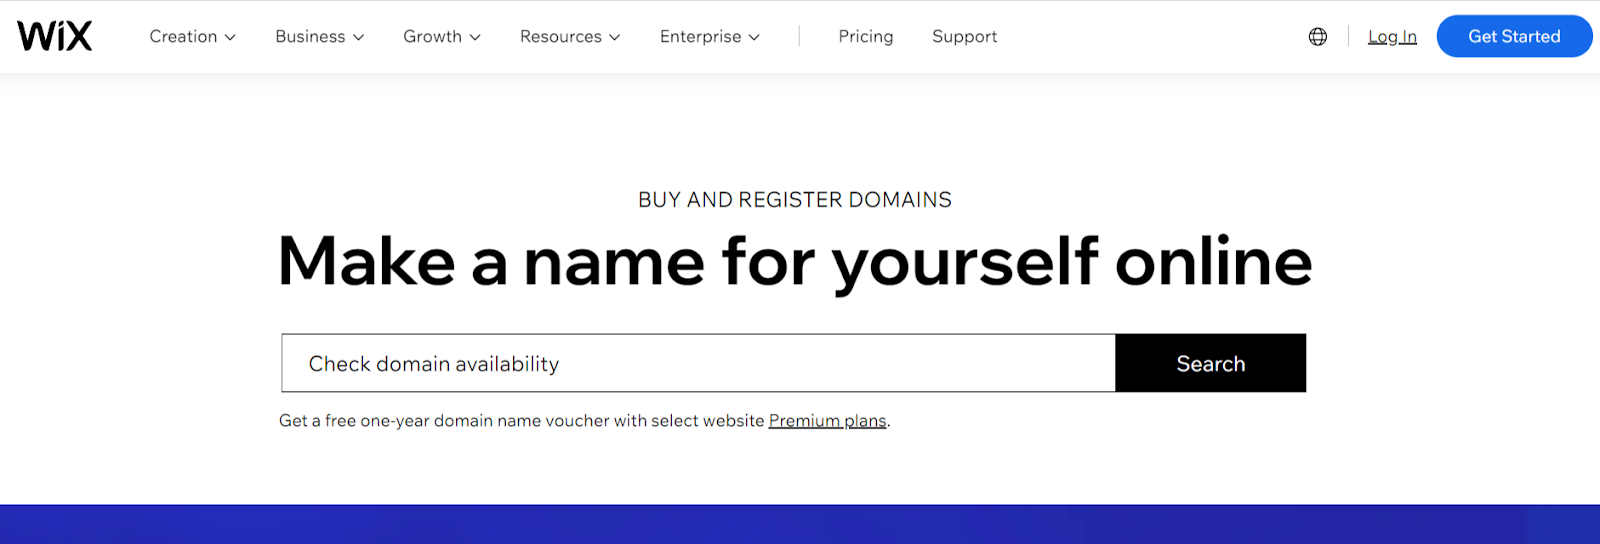 wix free domain name